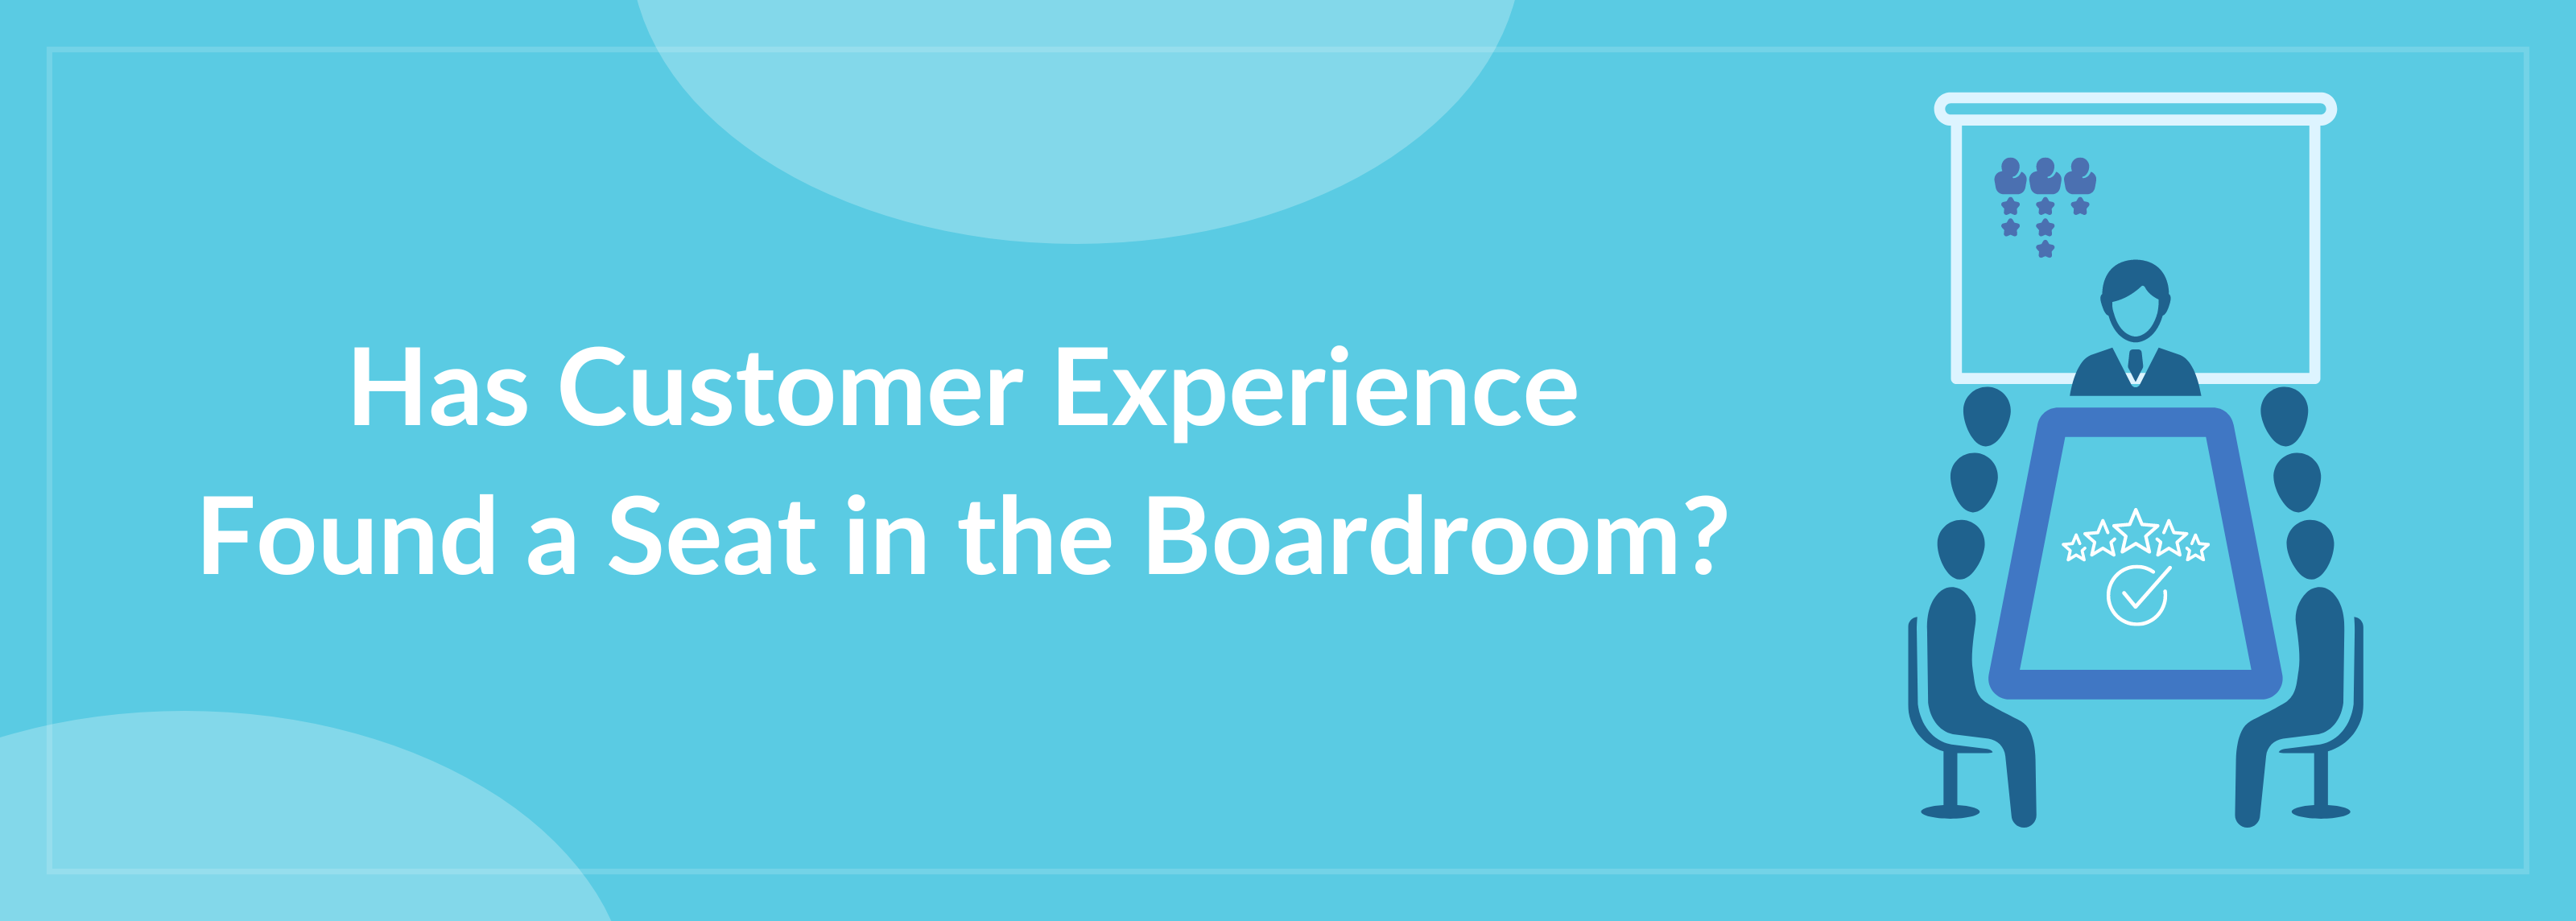 Customer Experience in Boardroom